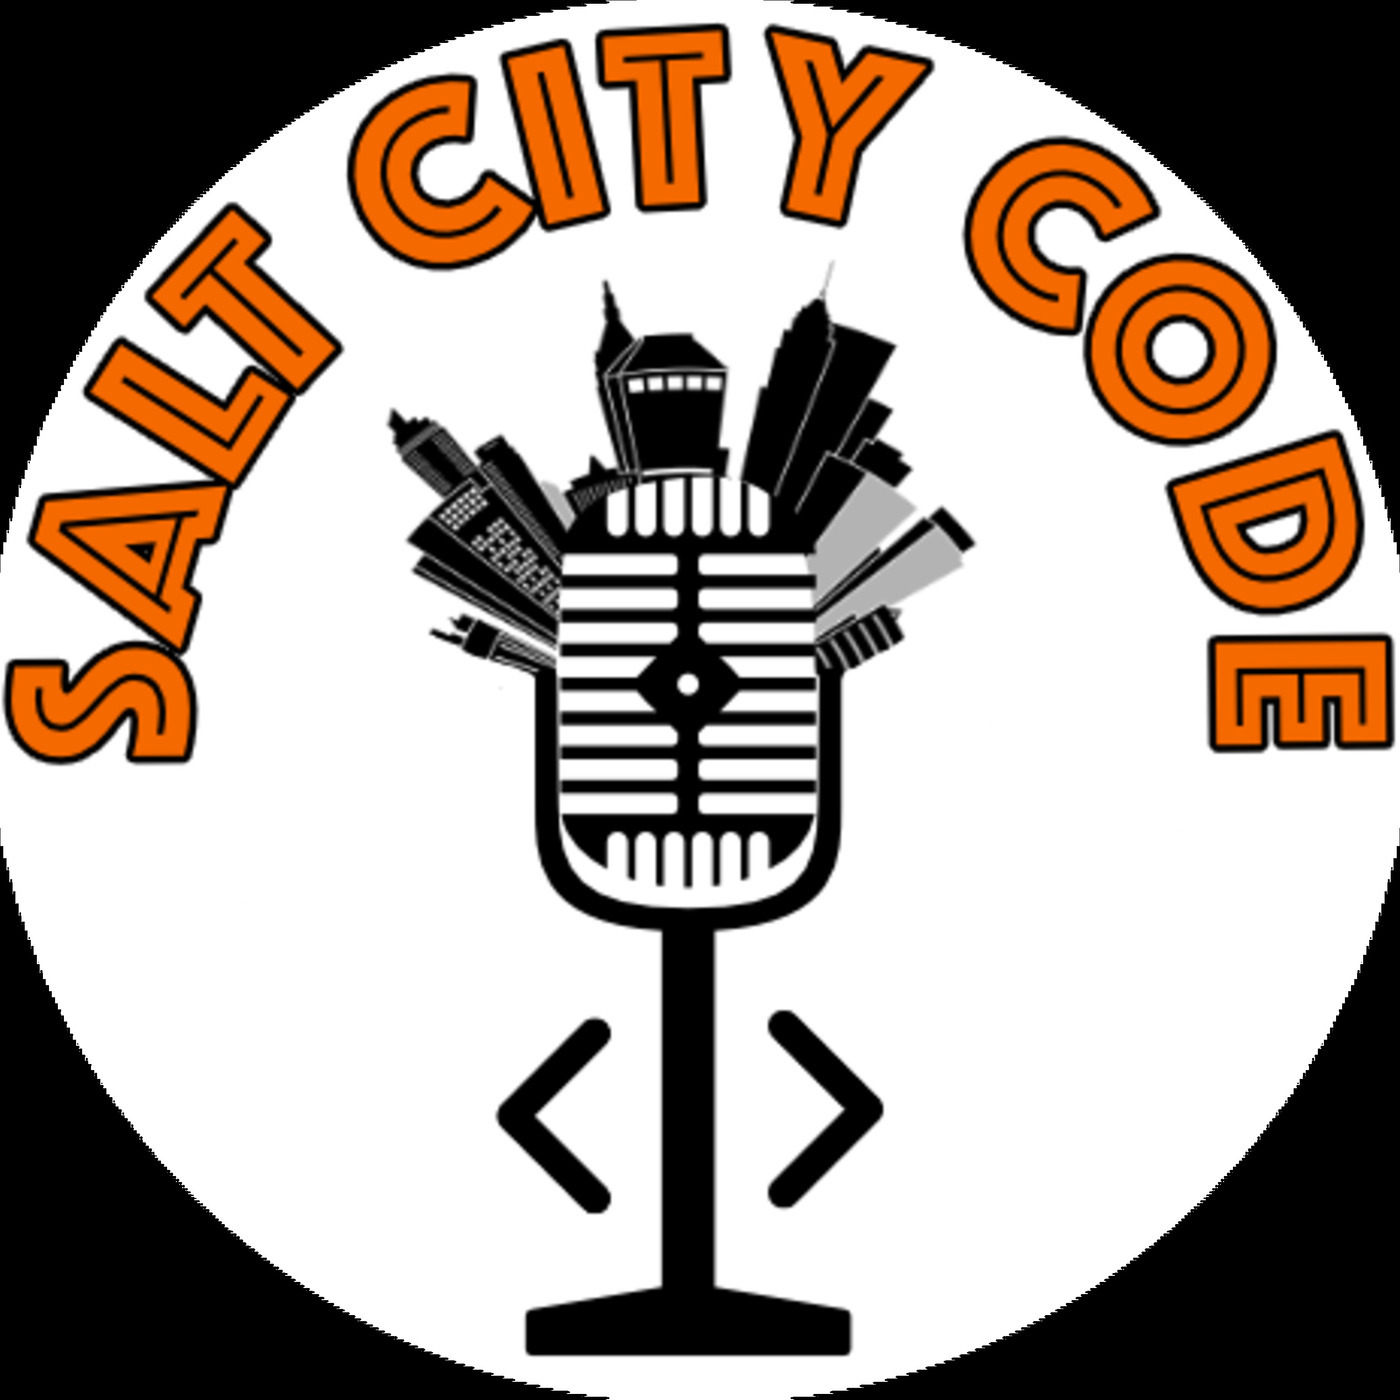 Salt City Code: Code for the Holidays